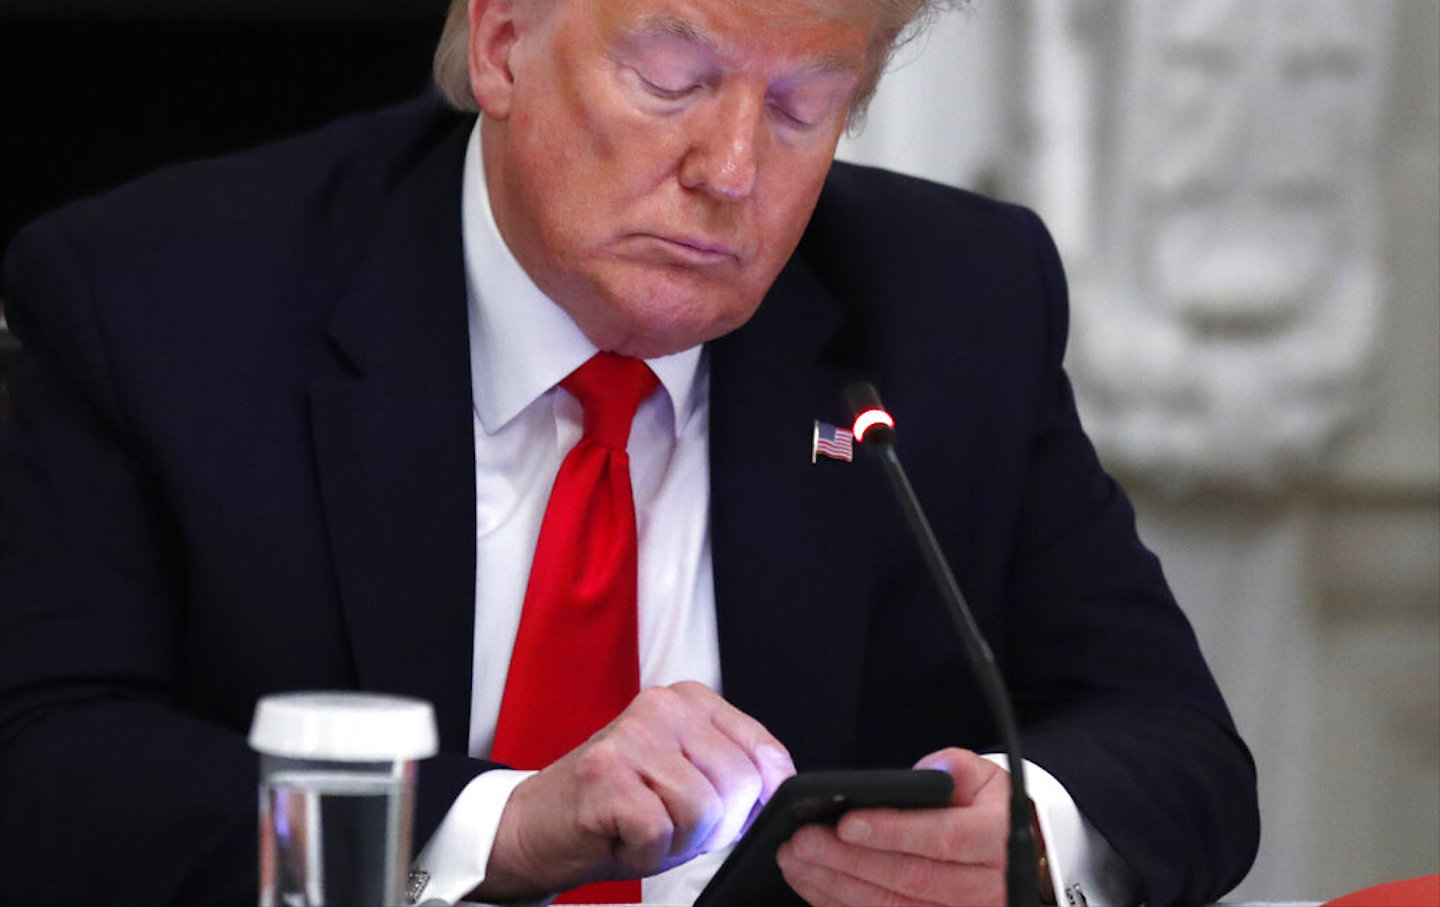 Trump on his phone